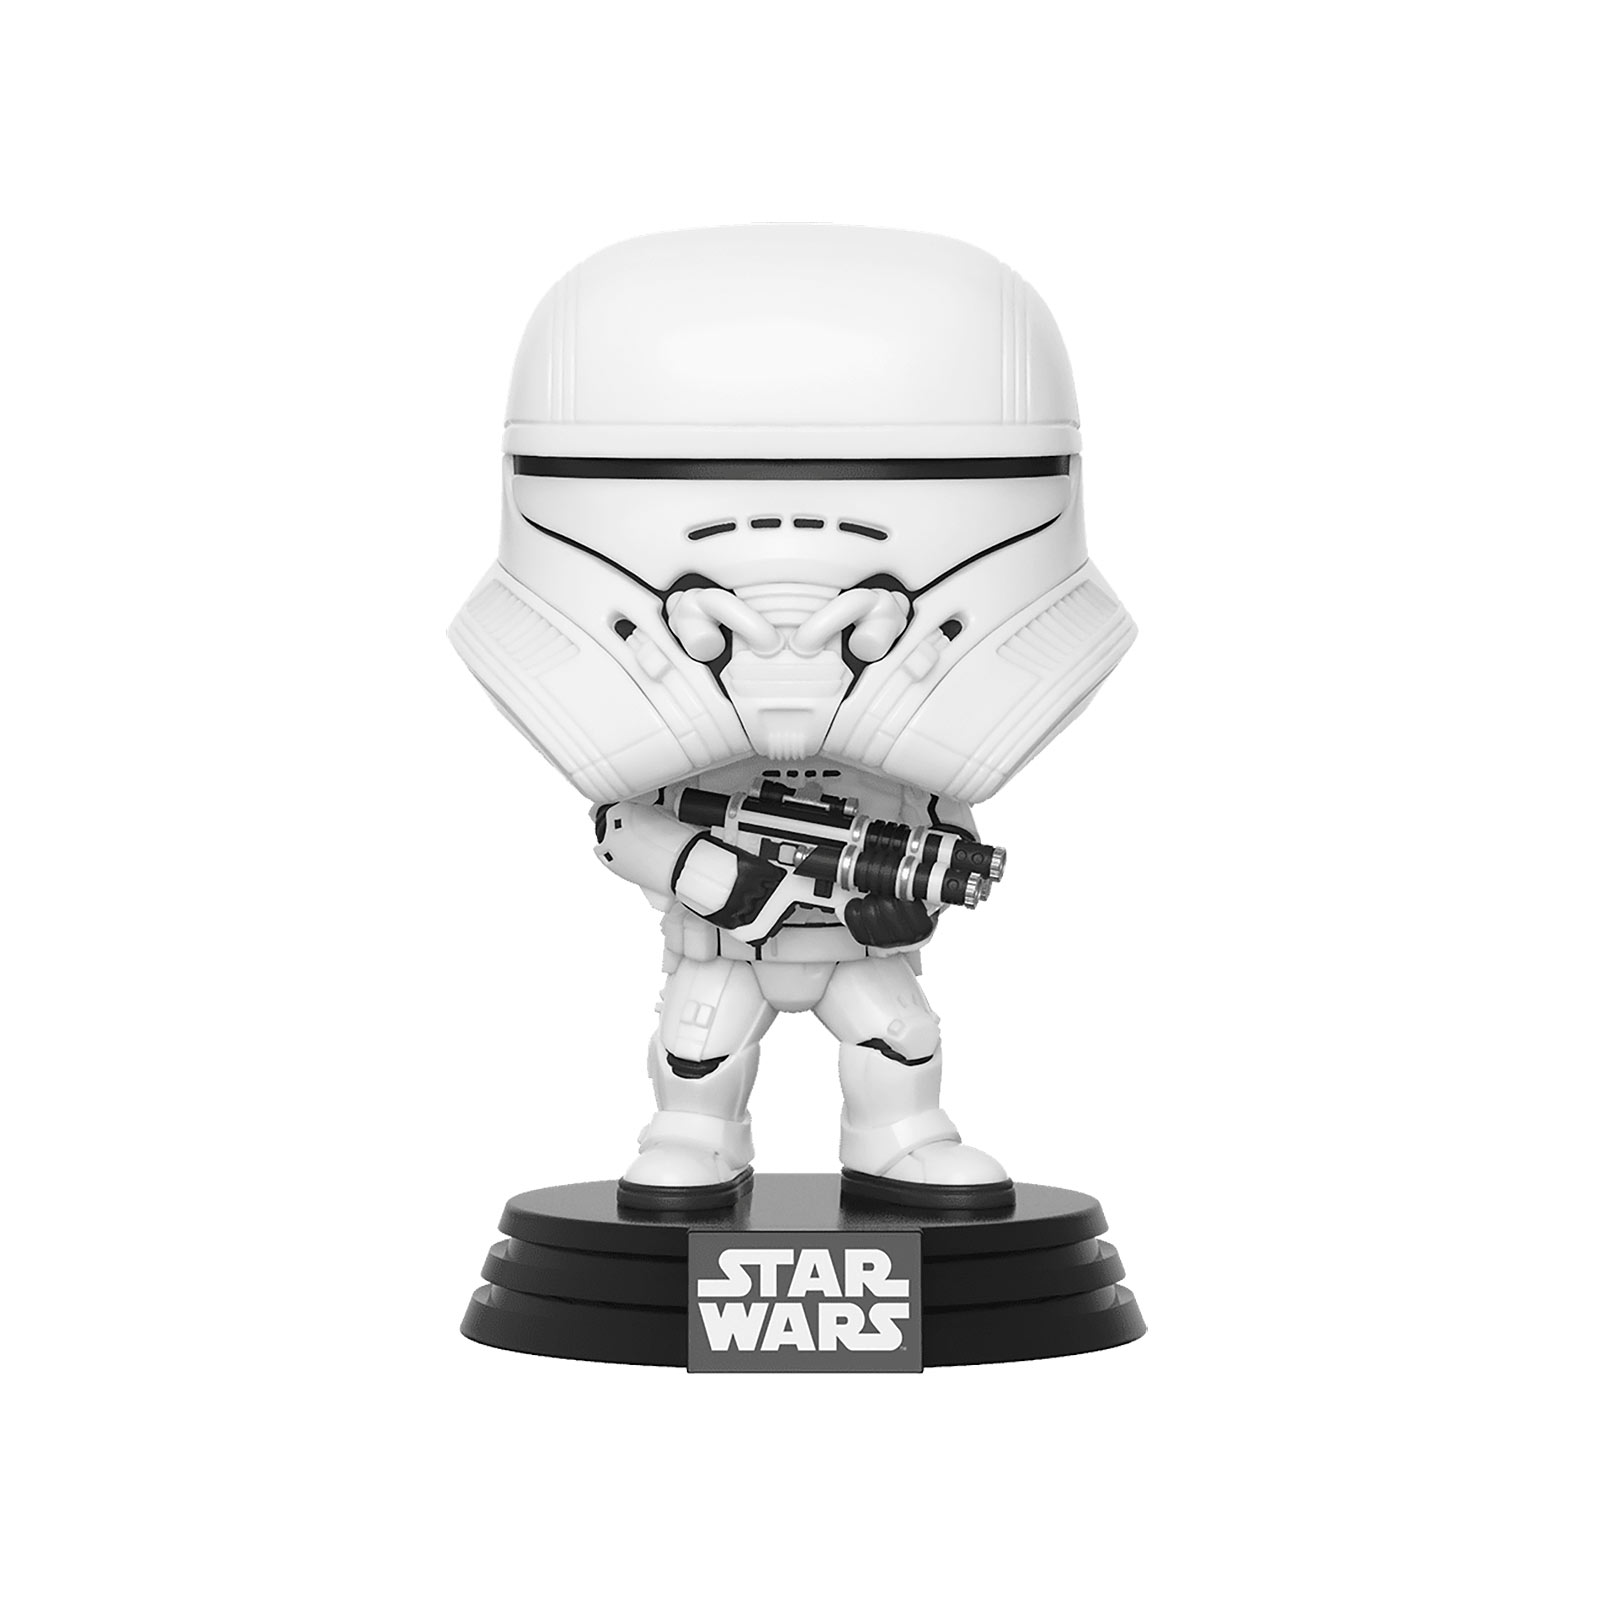 Star Wars - First Order Jet Trooper Funko Pop bobblehead figure